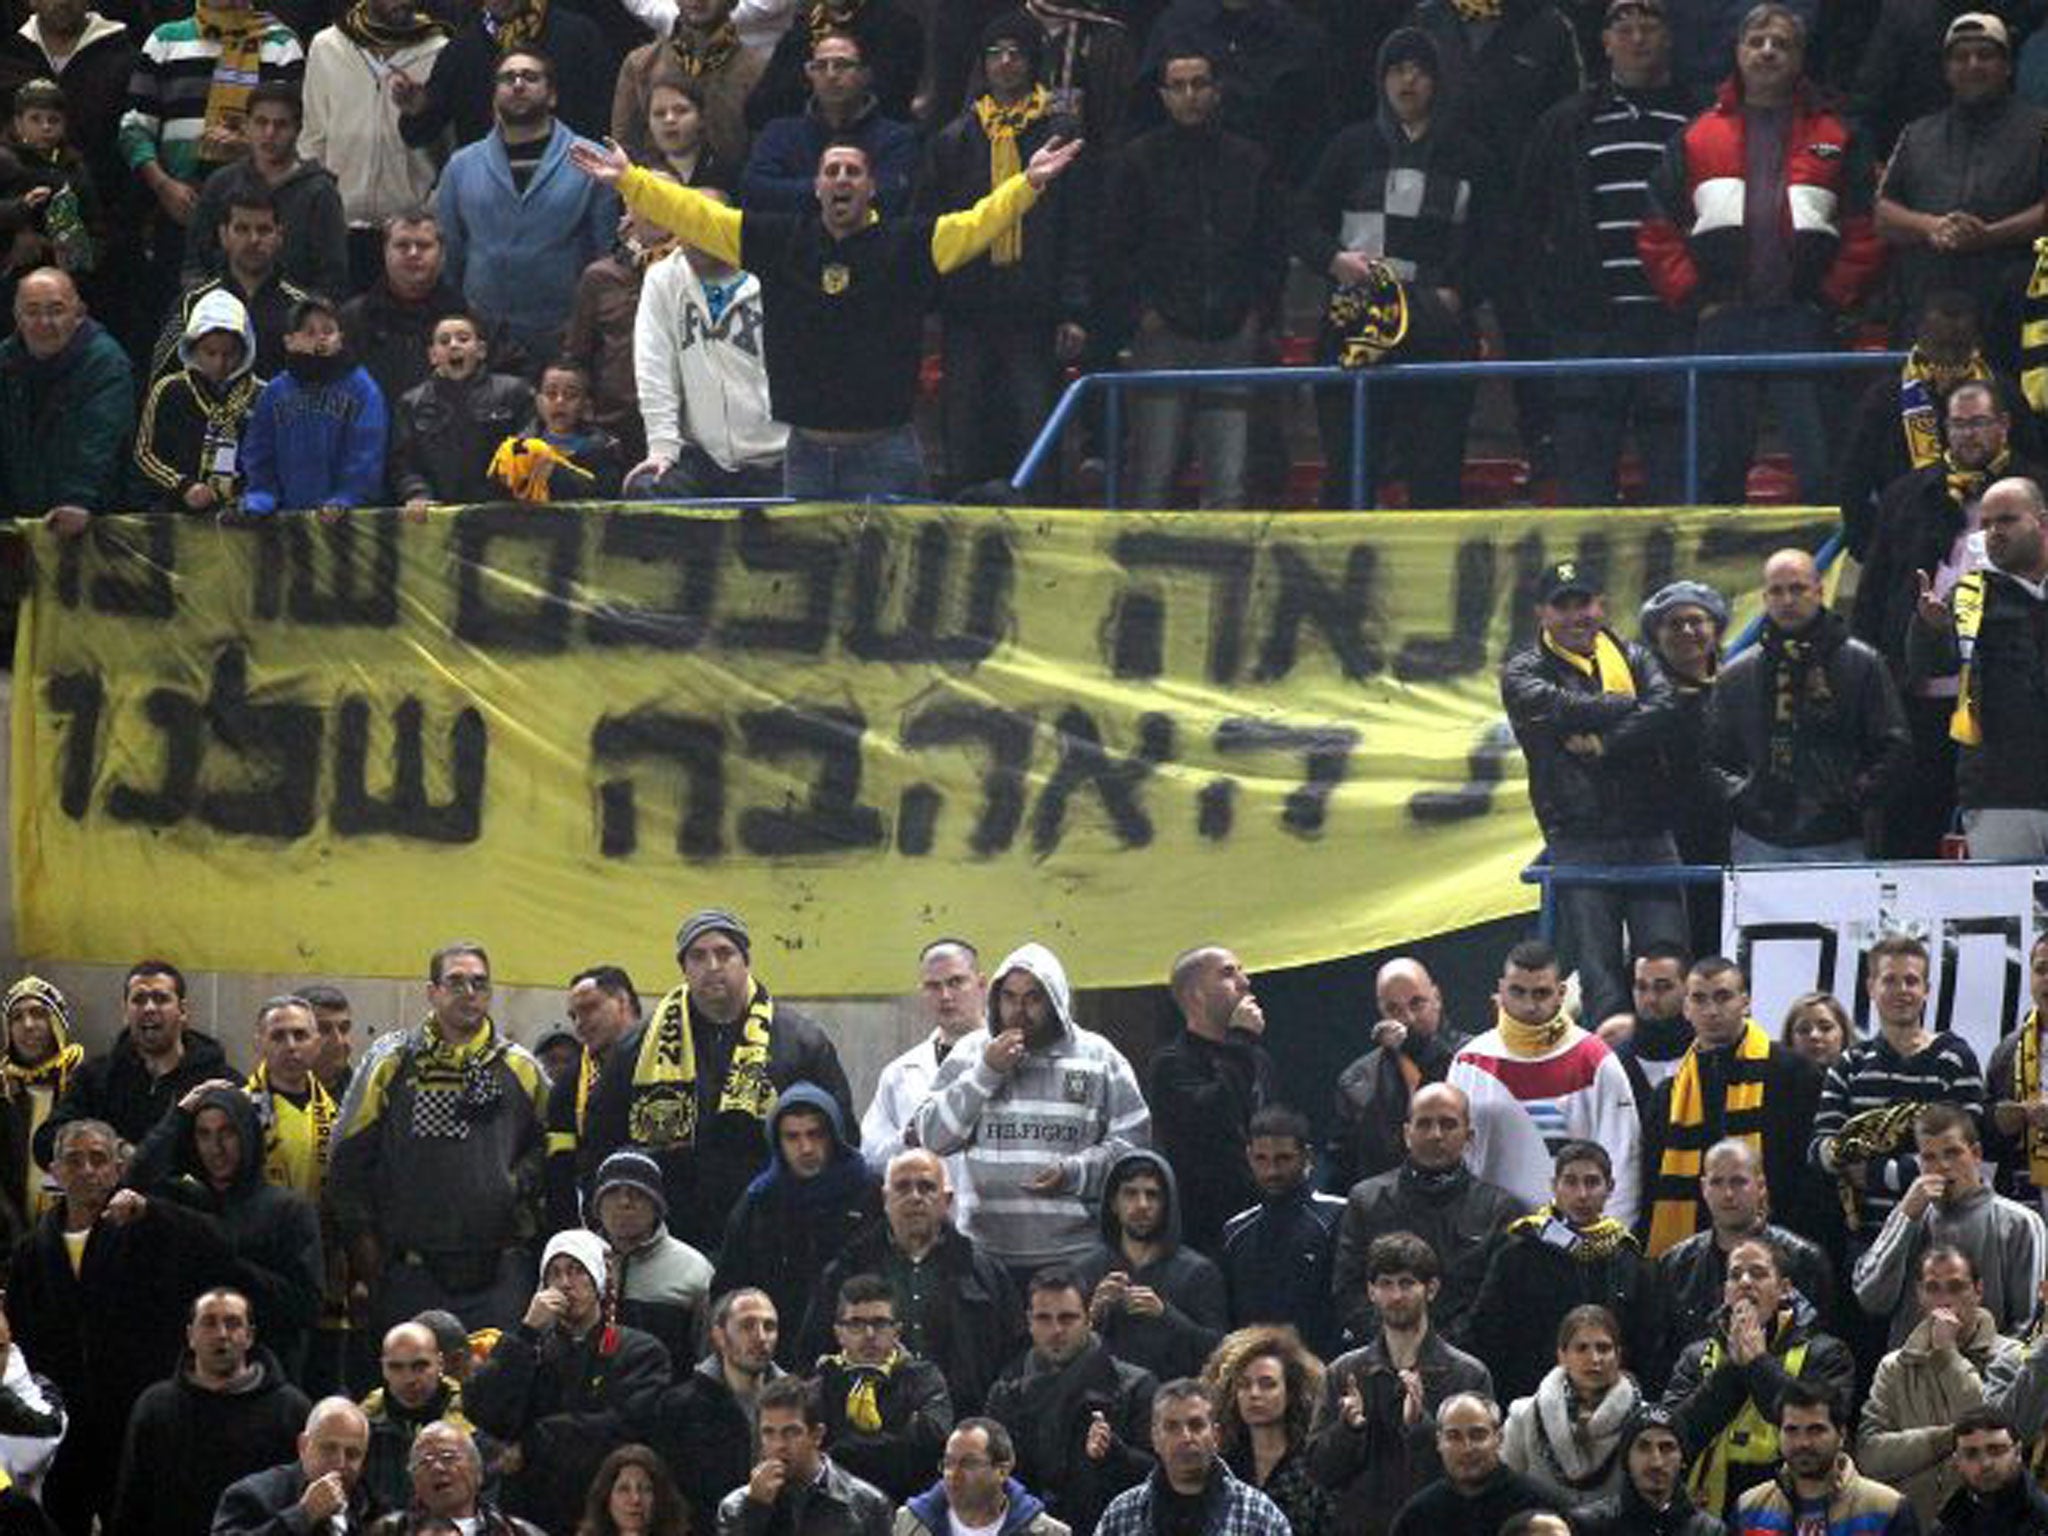 Teddy boys: Defiant Beitar fans’ slogan is ‘Your hatred burned our love’